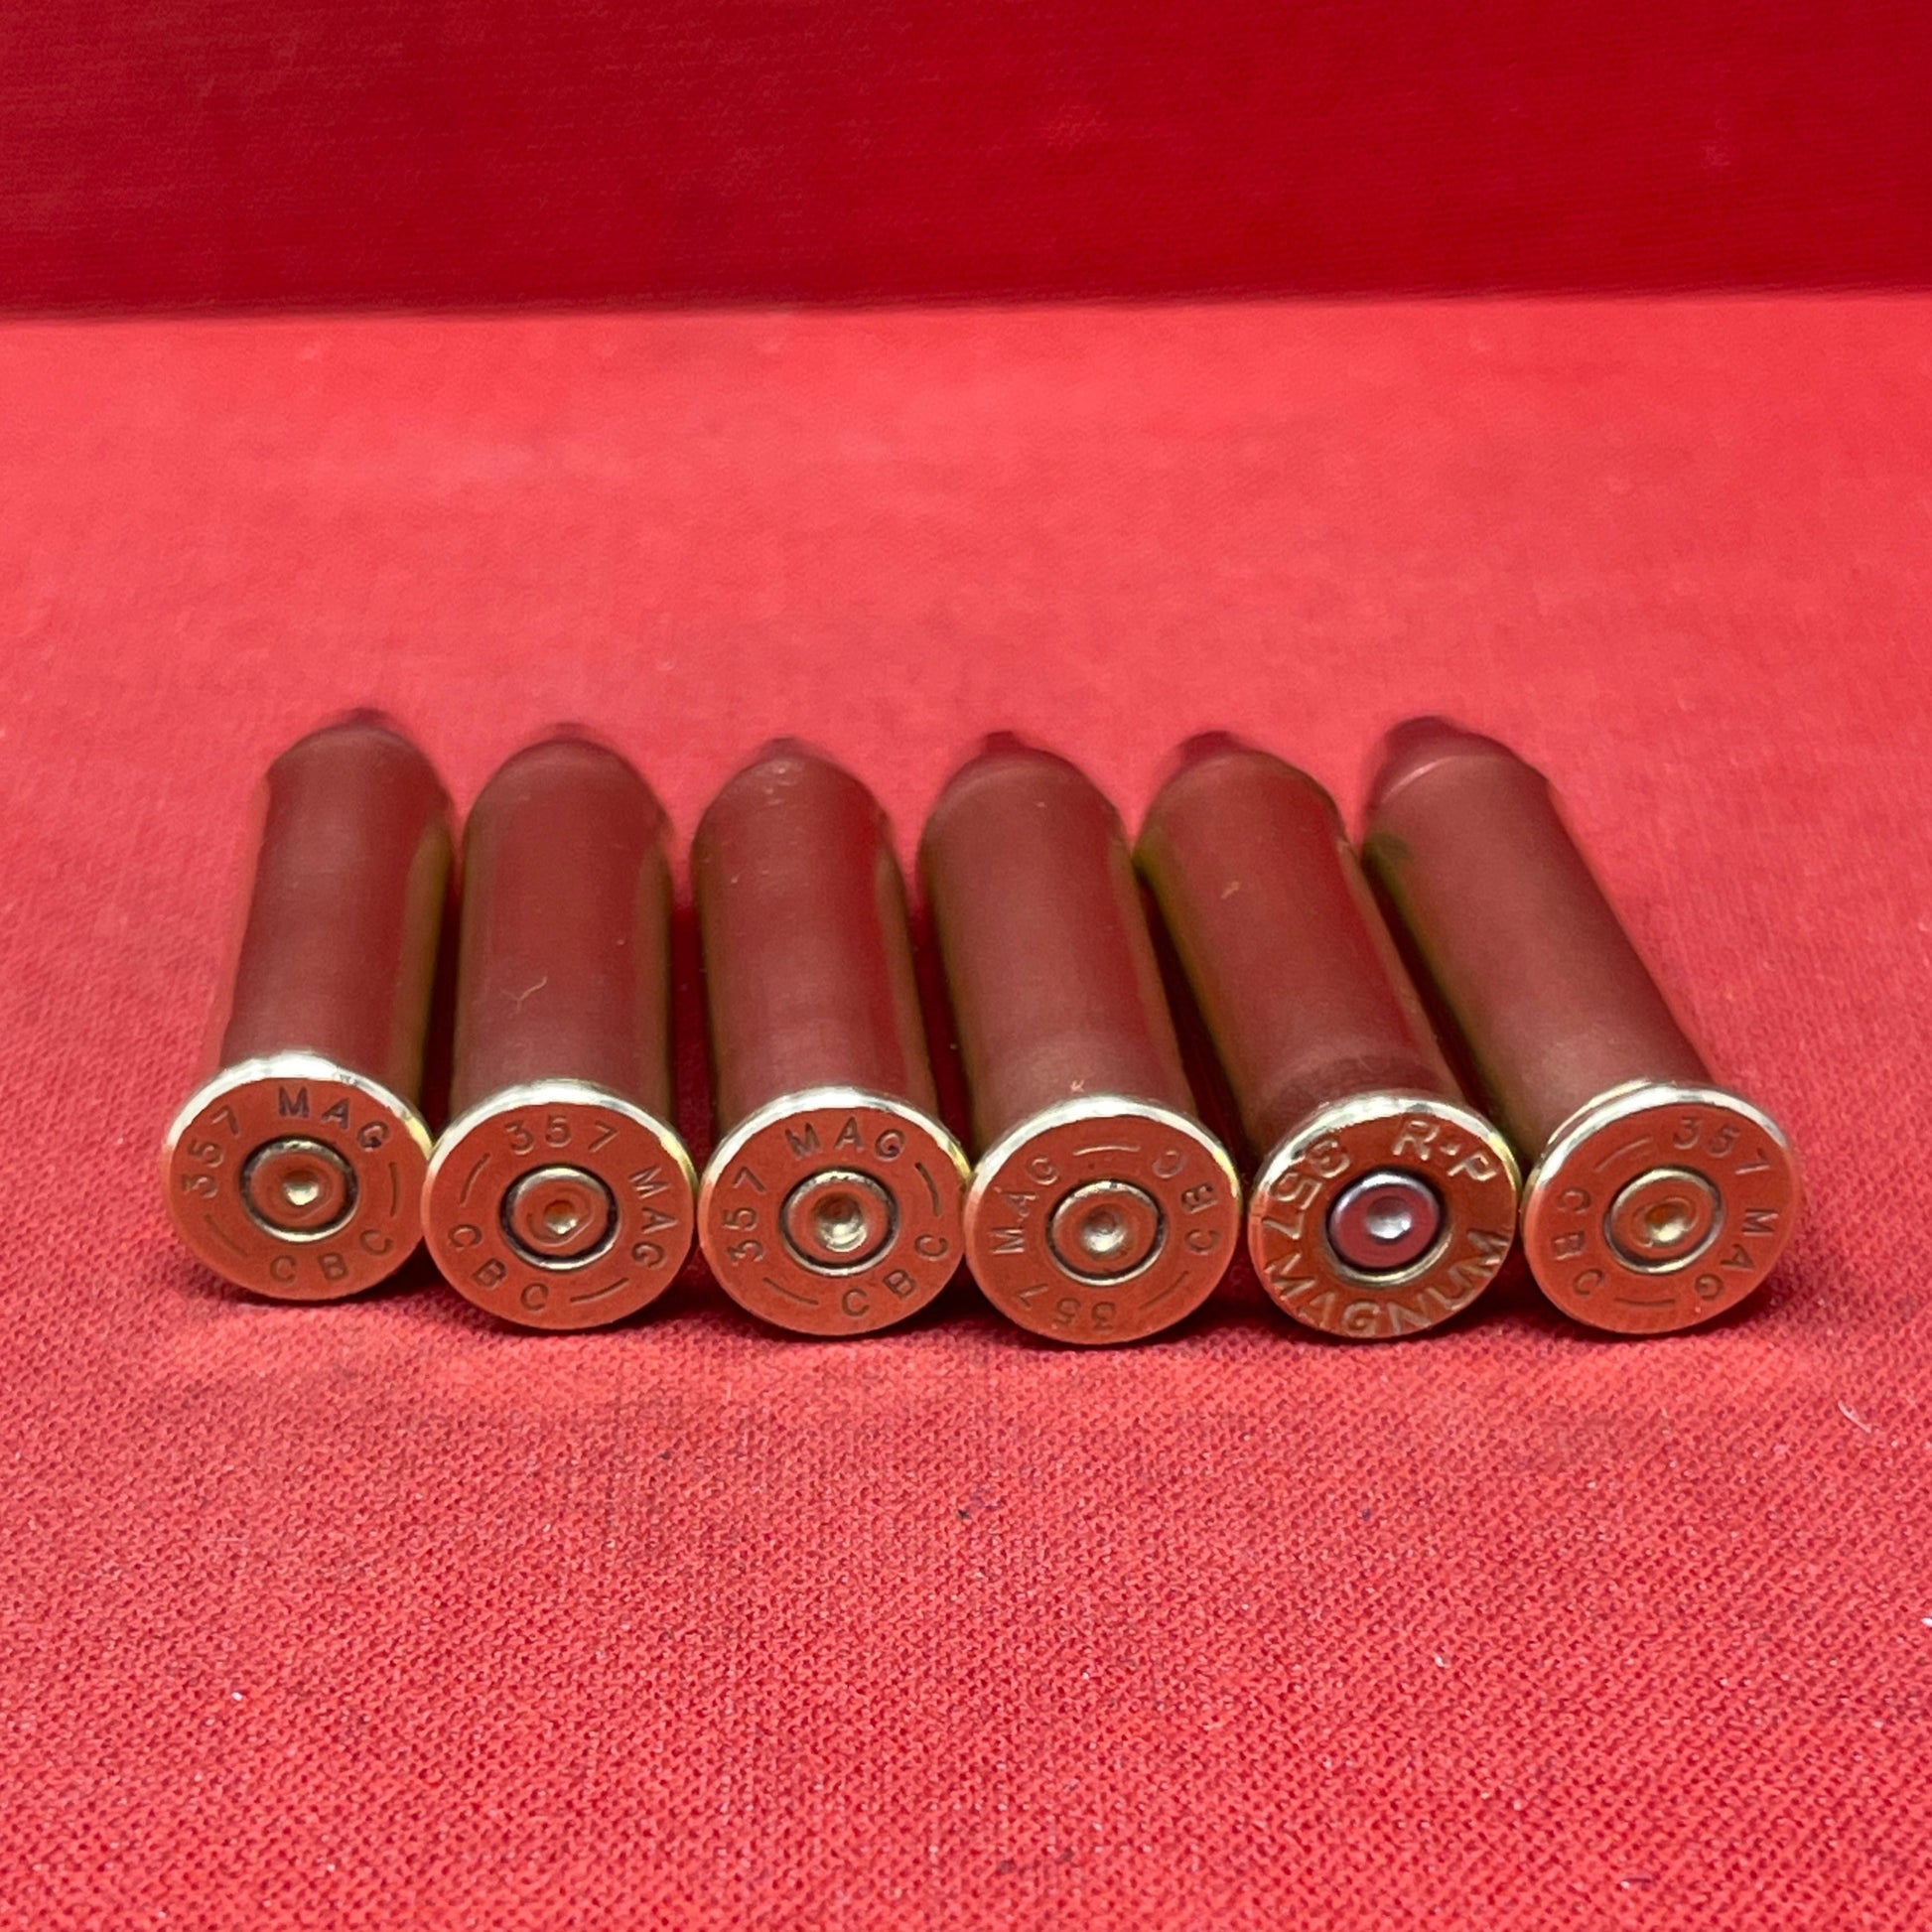 6 x Inert 357 Magnum Cartridges with Heads